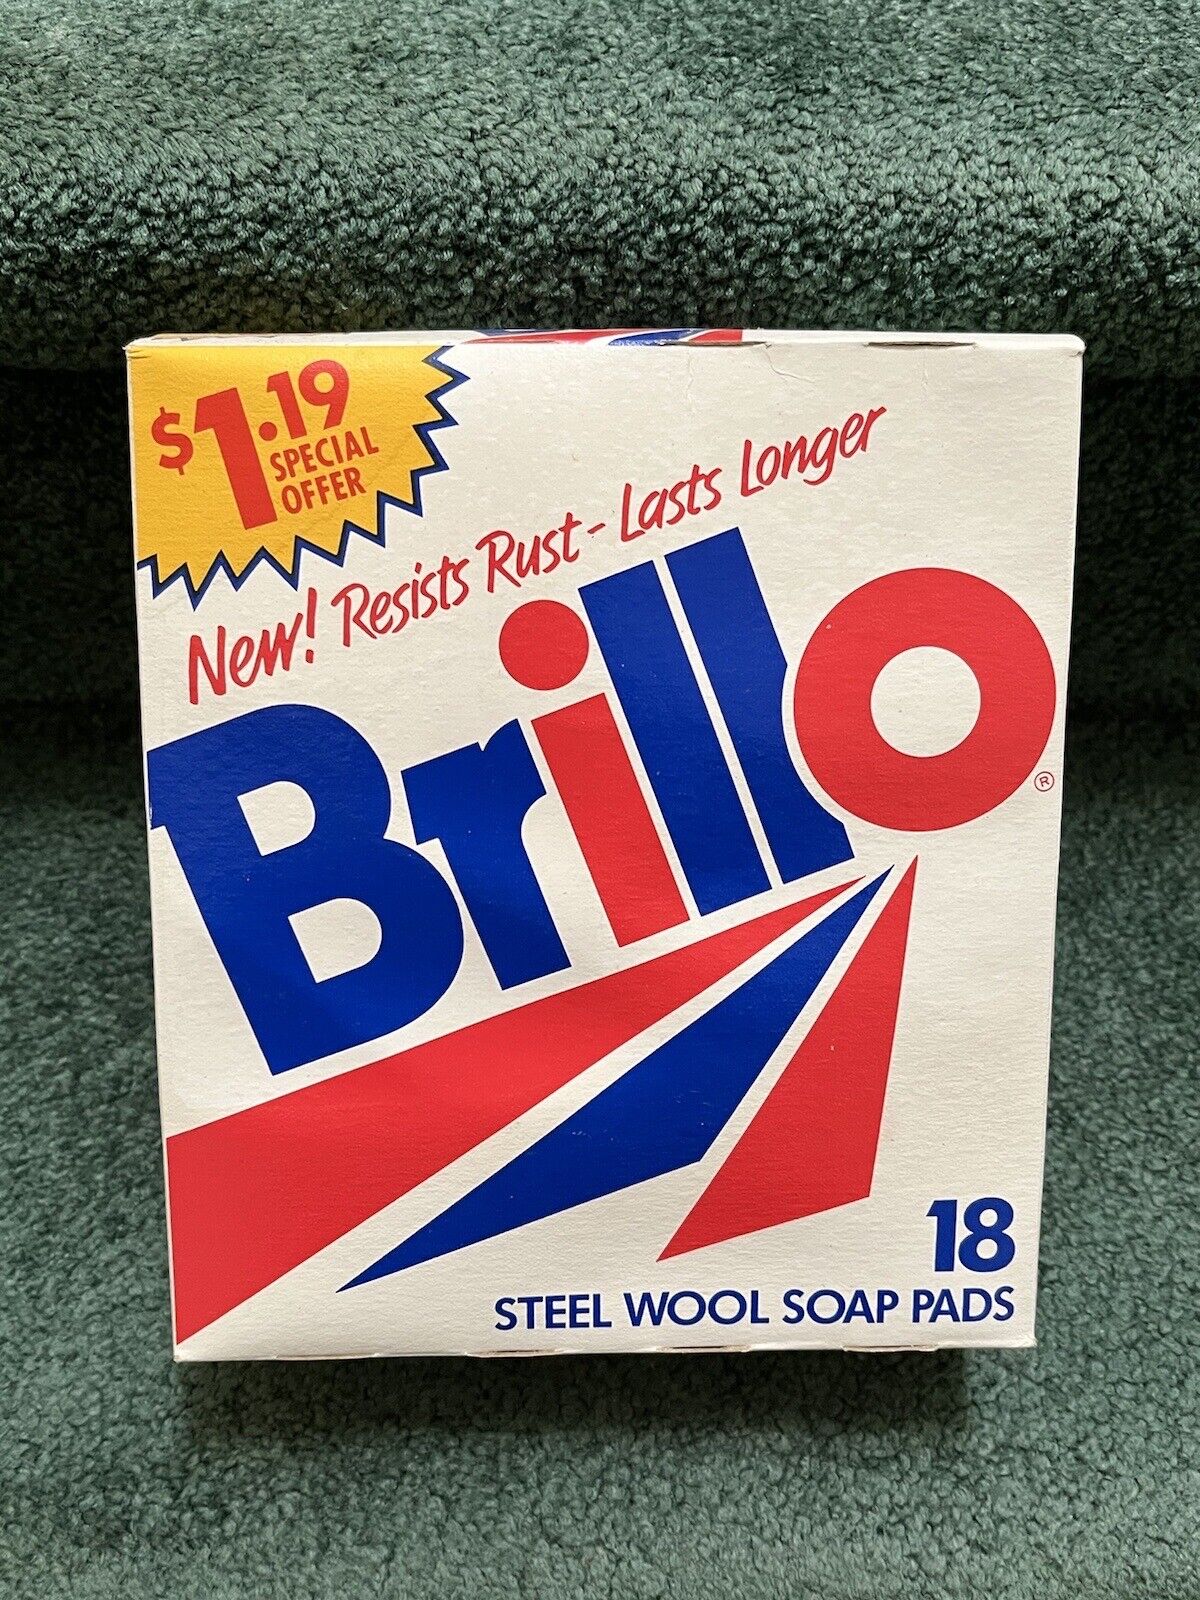 Brillo Steel Wool Soap Pads Full Box Of 18 Vintage 1980-90s Retro TV Movie Prop